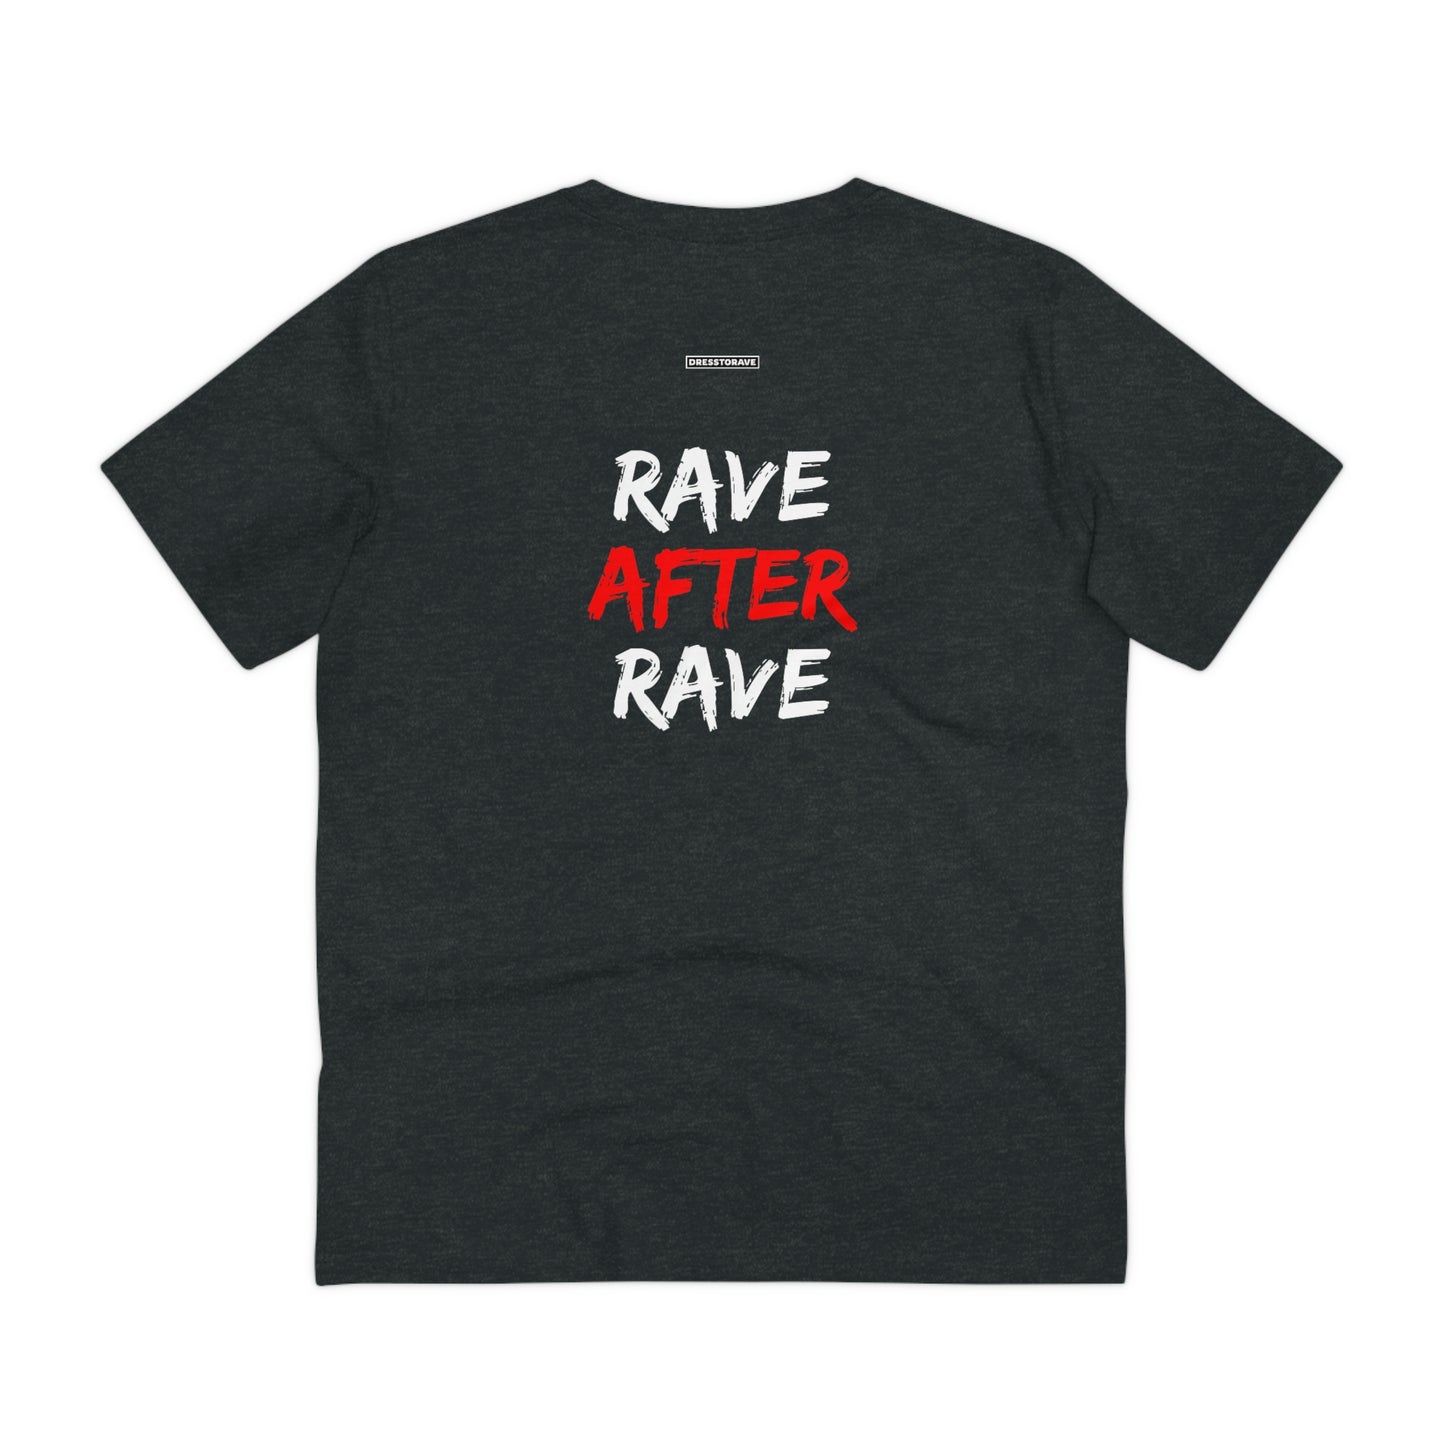 Rave after rave - Organic T-shirt - Unisex